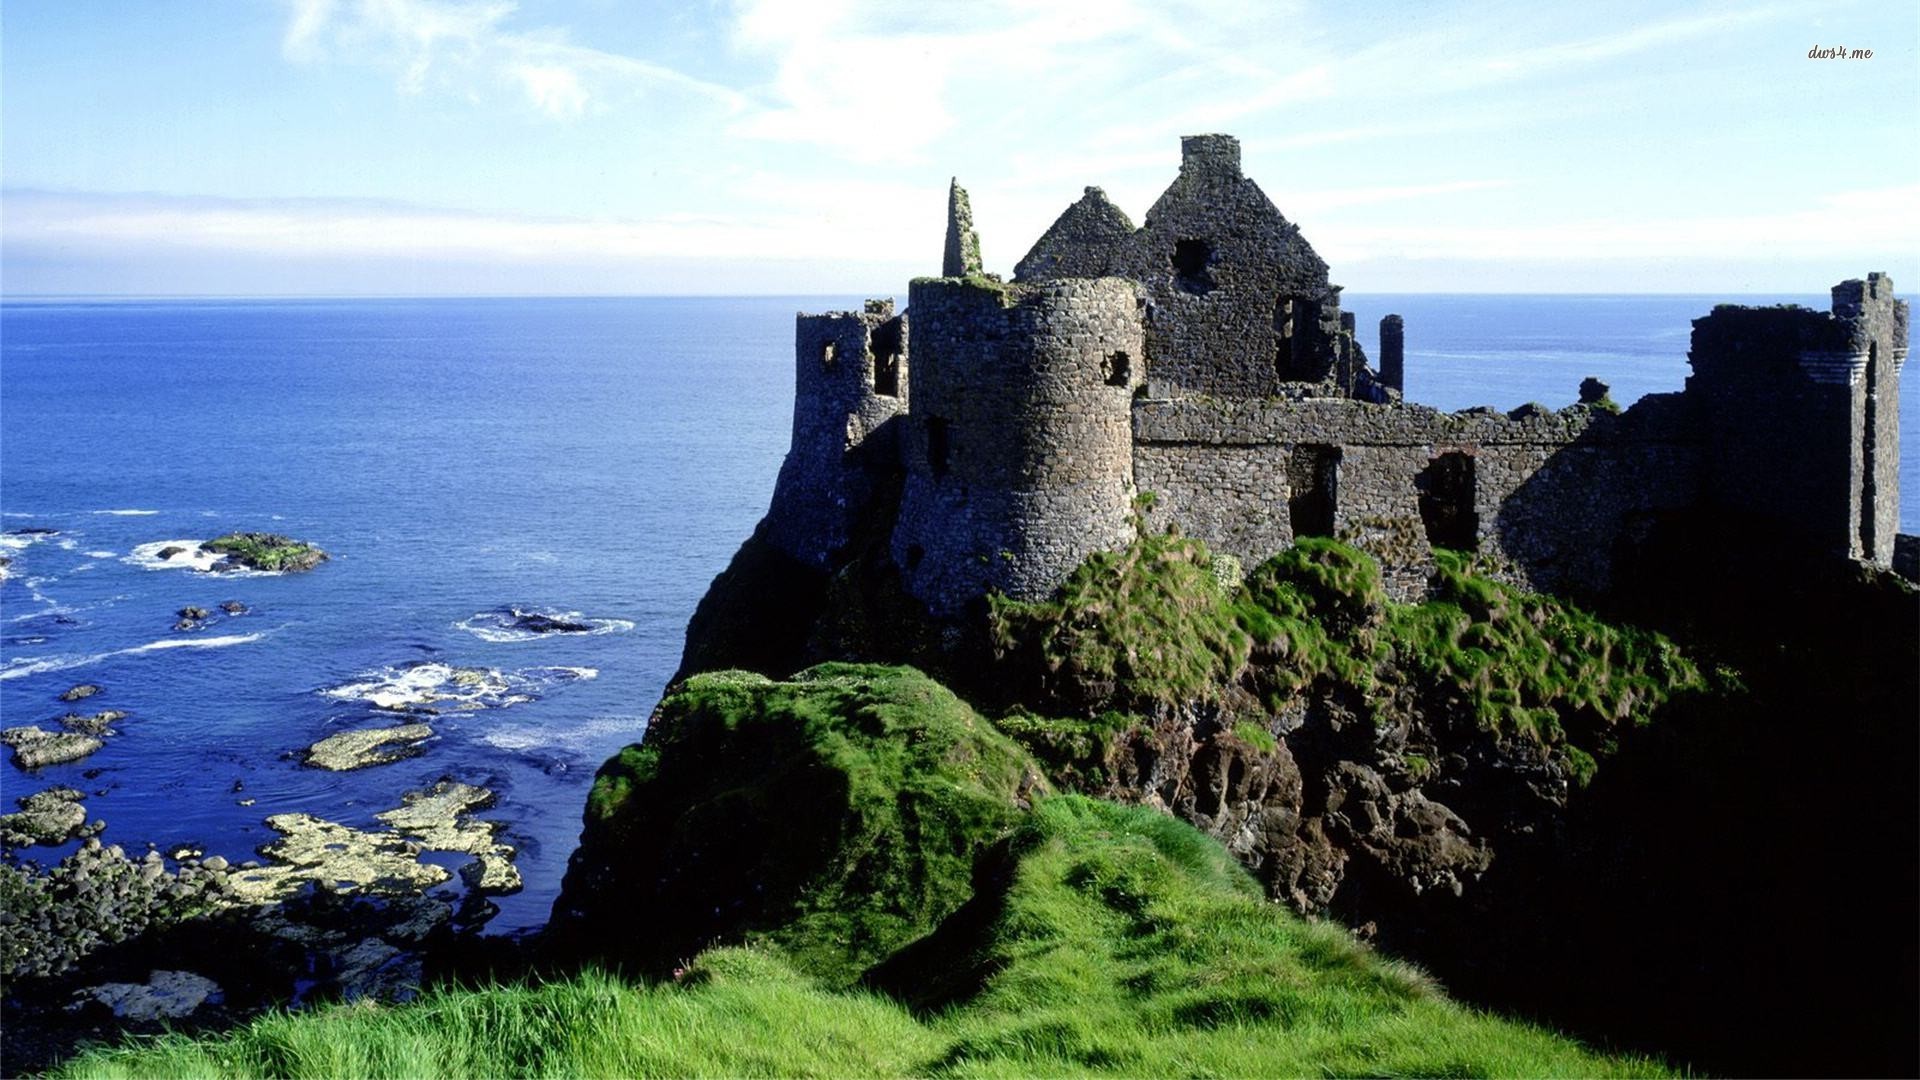 Ireland Tourist Destinations